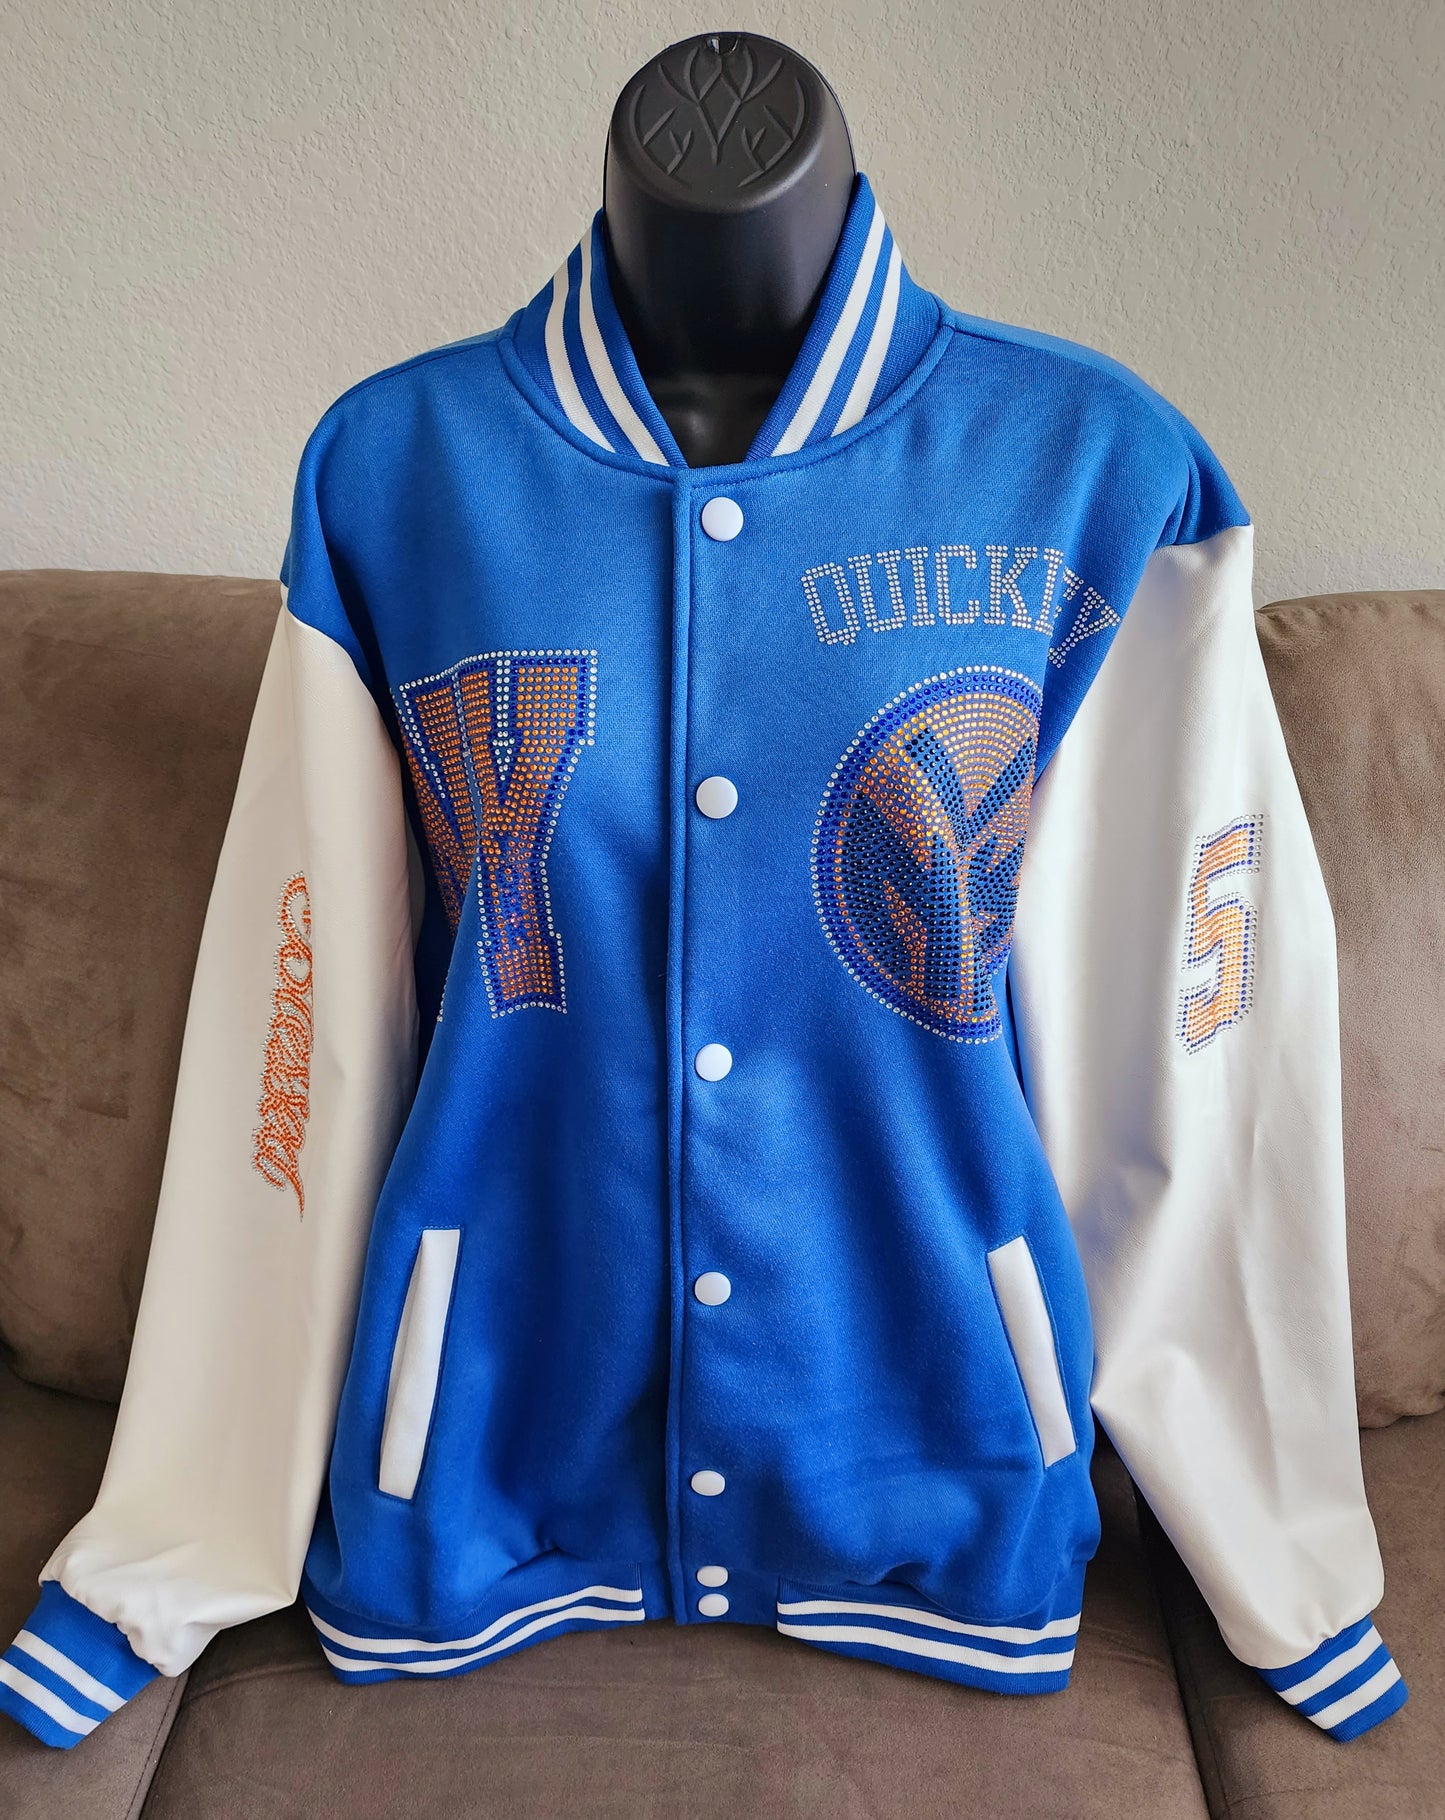 New York Knicks Rhinestone Bling Varsity Wool Letterman Jacket with Leather Sleeves